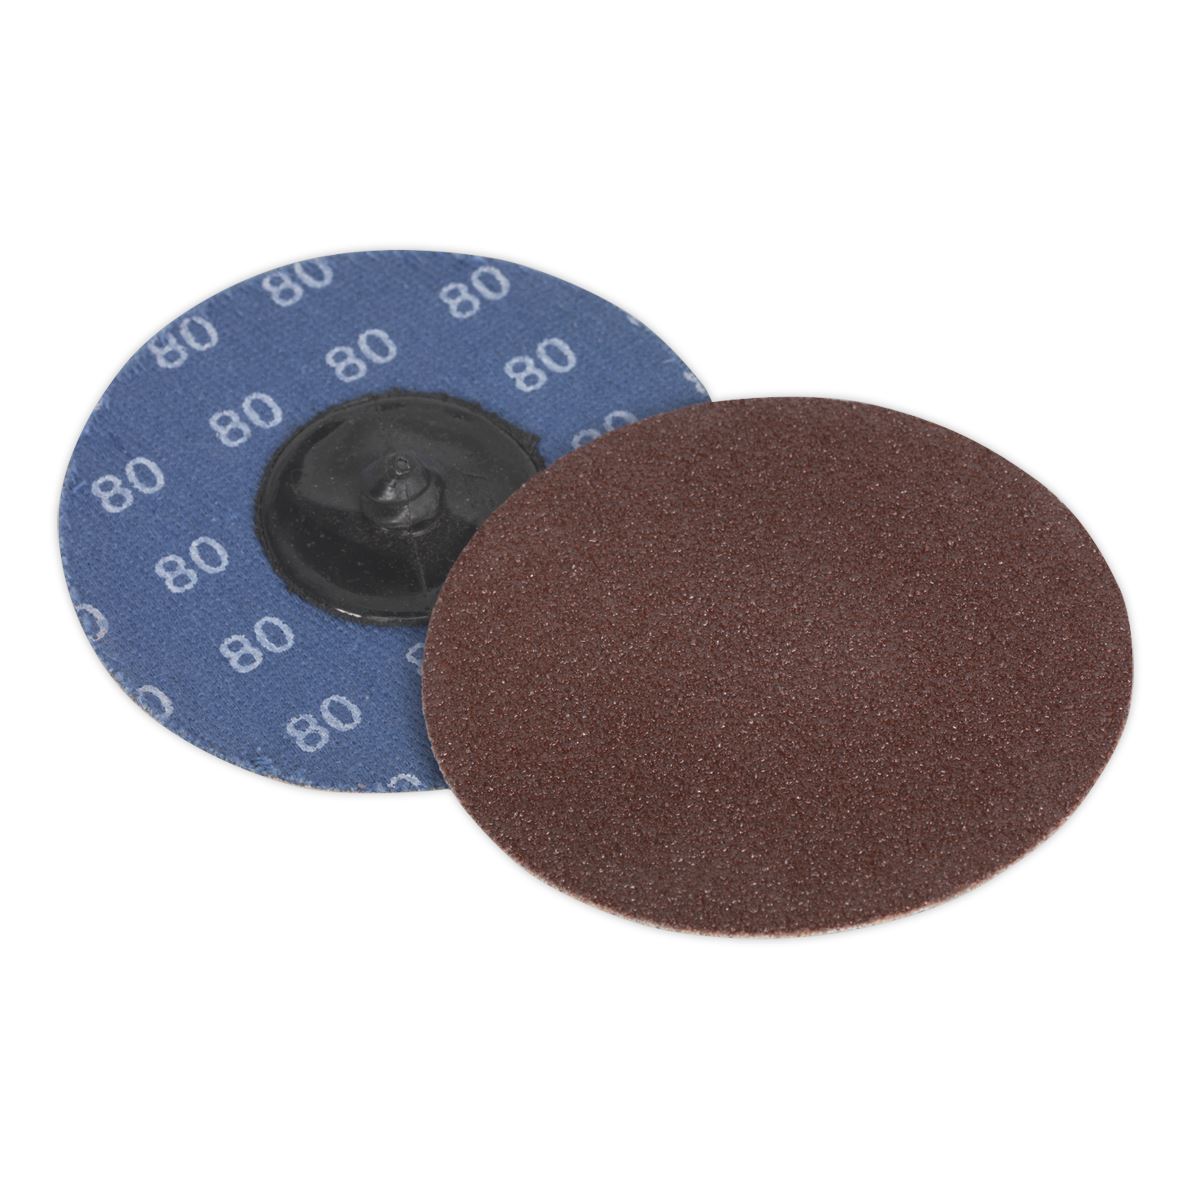 Sealey Quick-Change Sanding Disc Ø75mm 80Grit Pack of 10